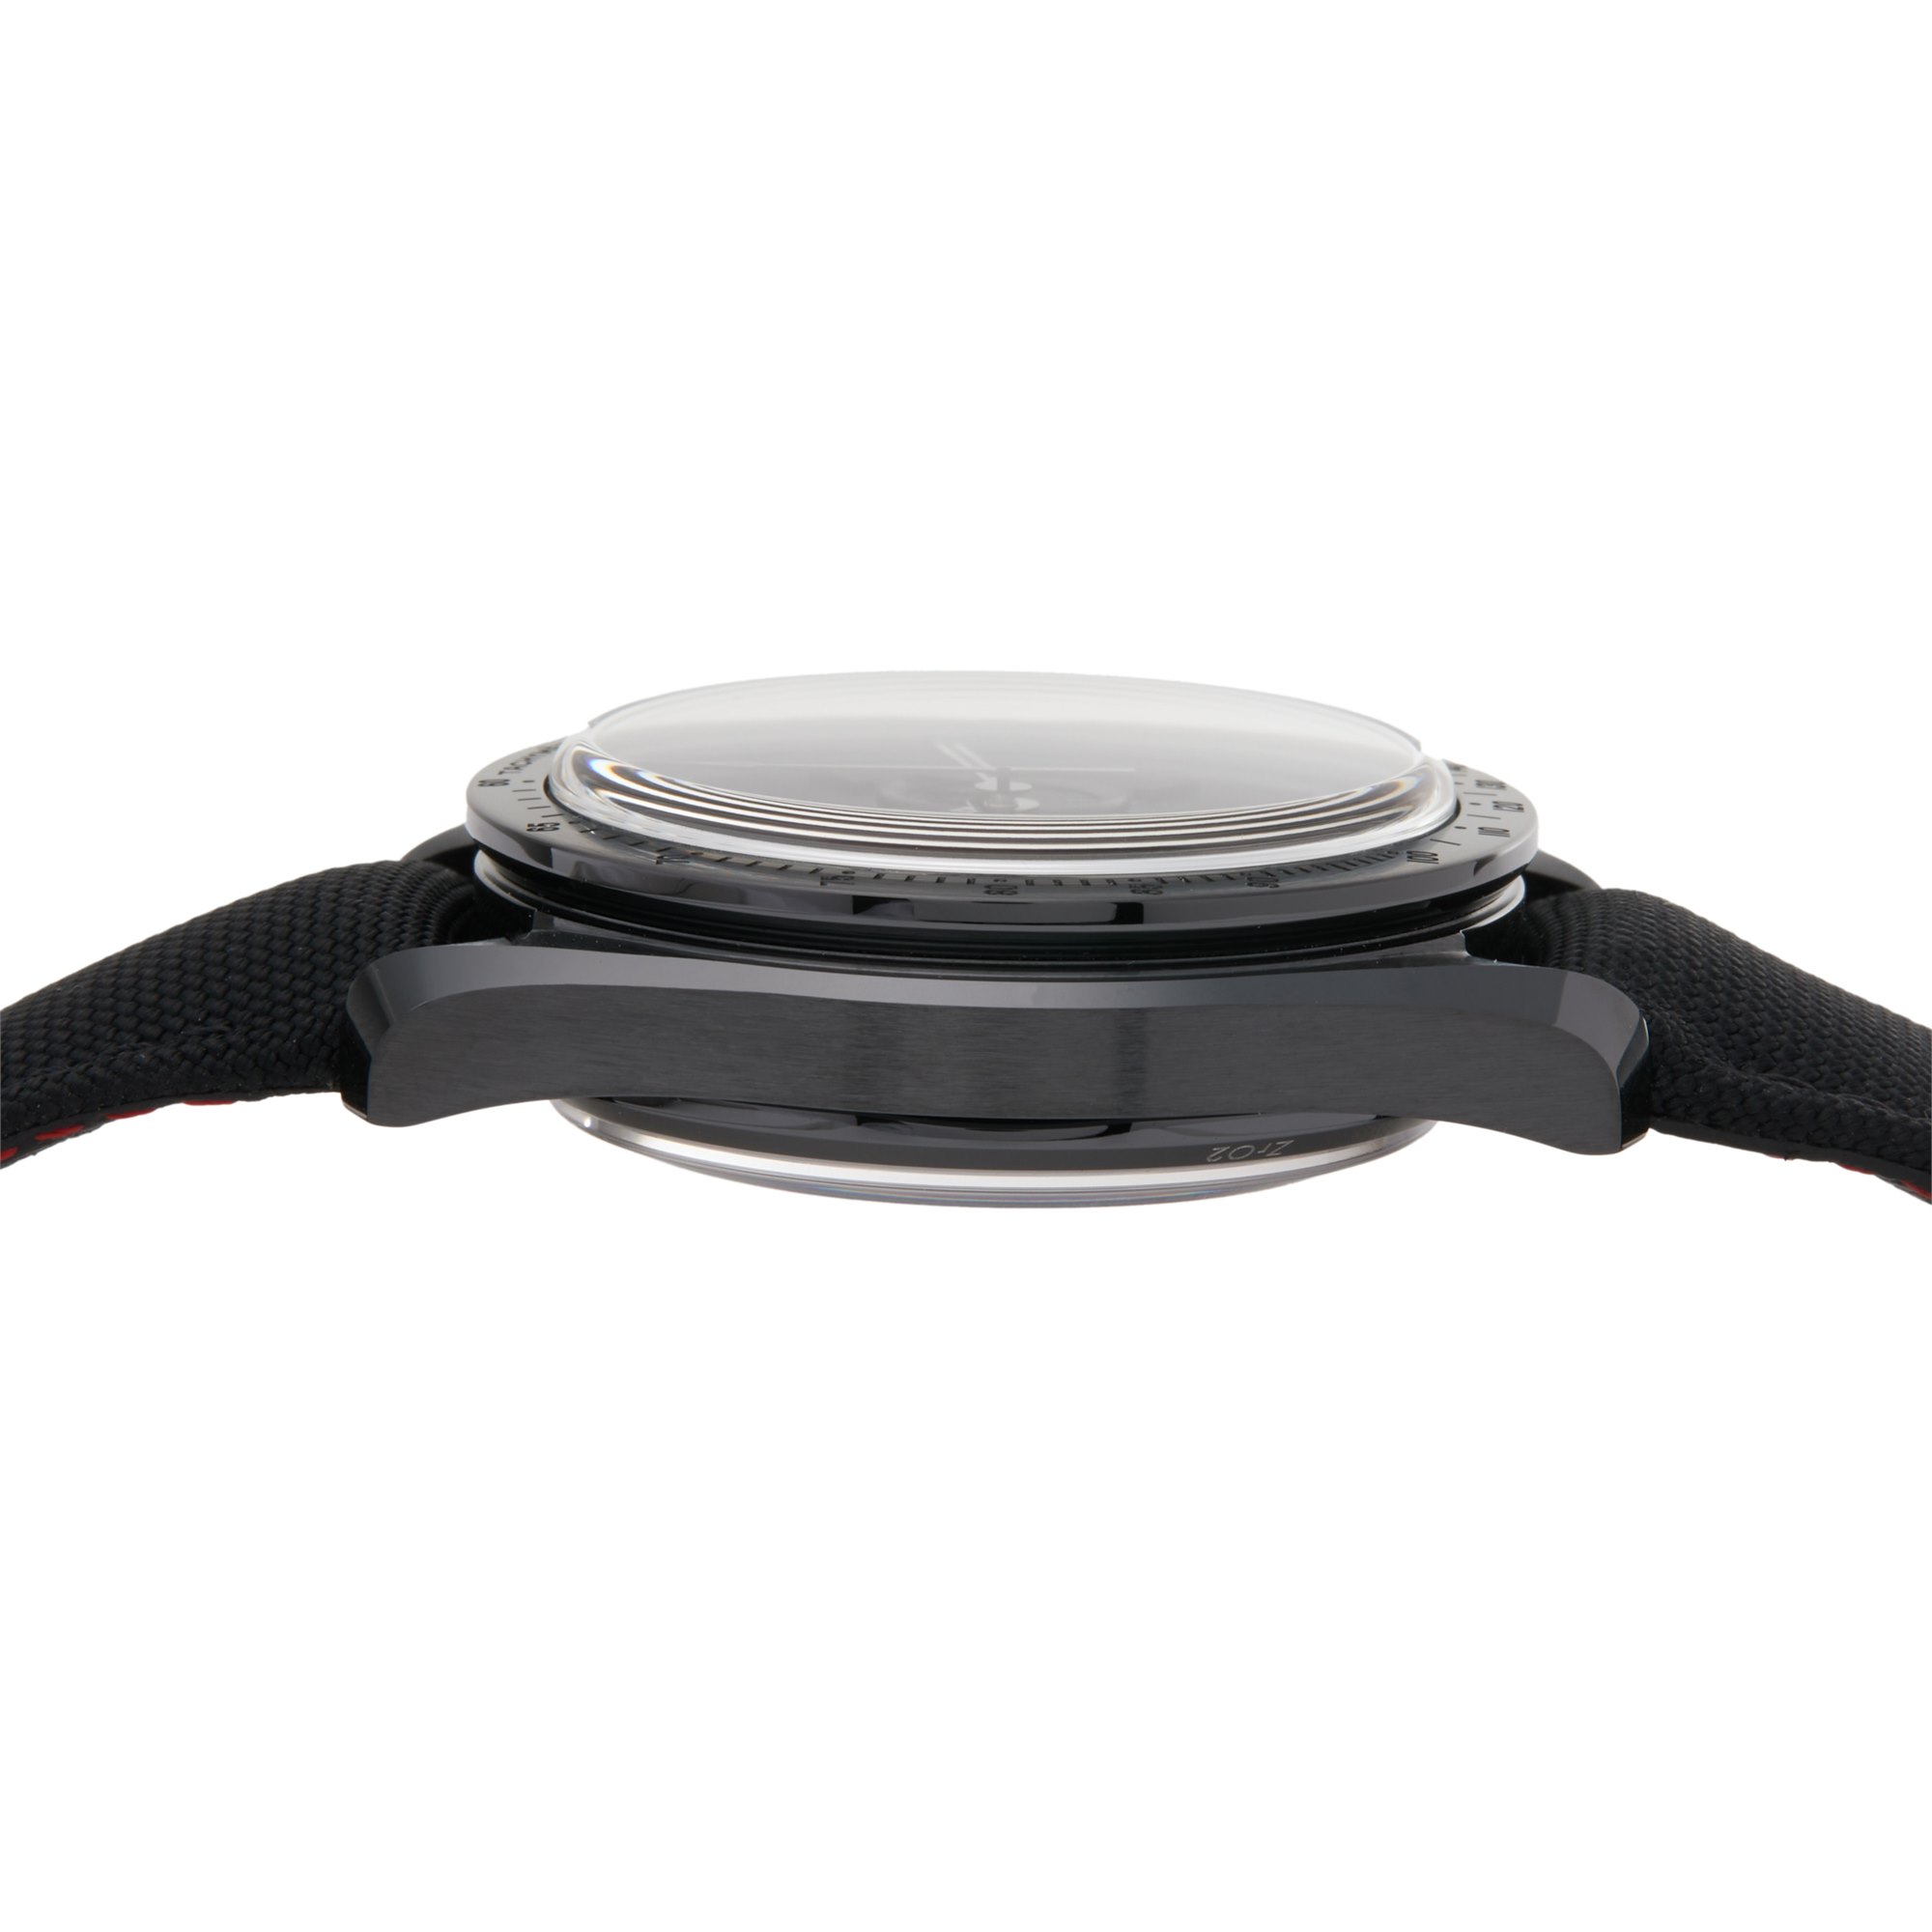 Omega Speedmaster Professional Moonwatch Ceramic 311.92.44.51.01.005